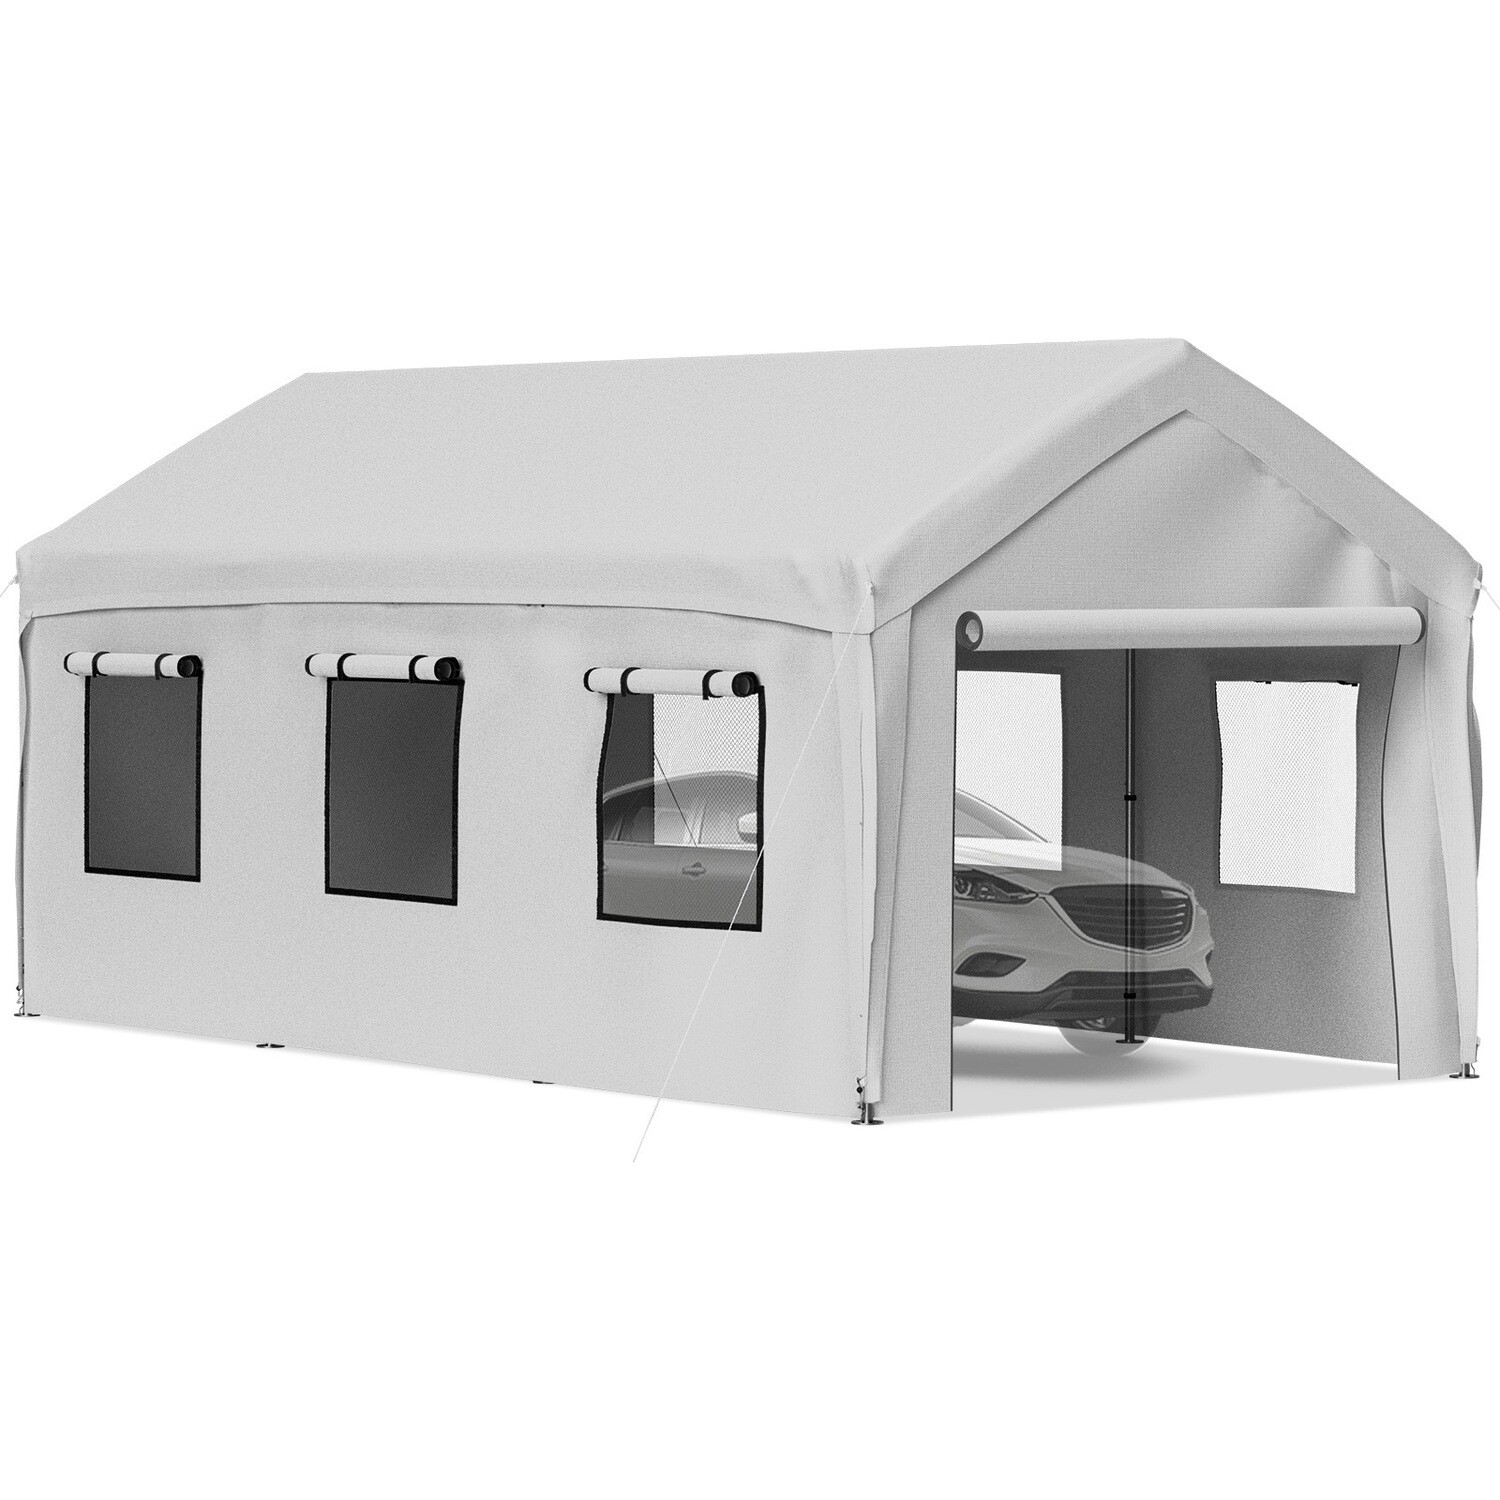 Carport Canopy 10 x 20ft w/ 8 Legs, Sidewalls, and Windows Gray